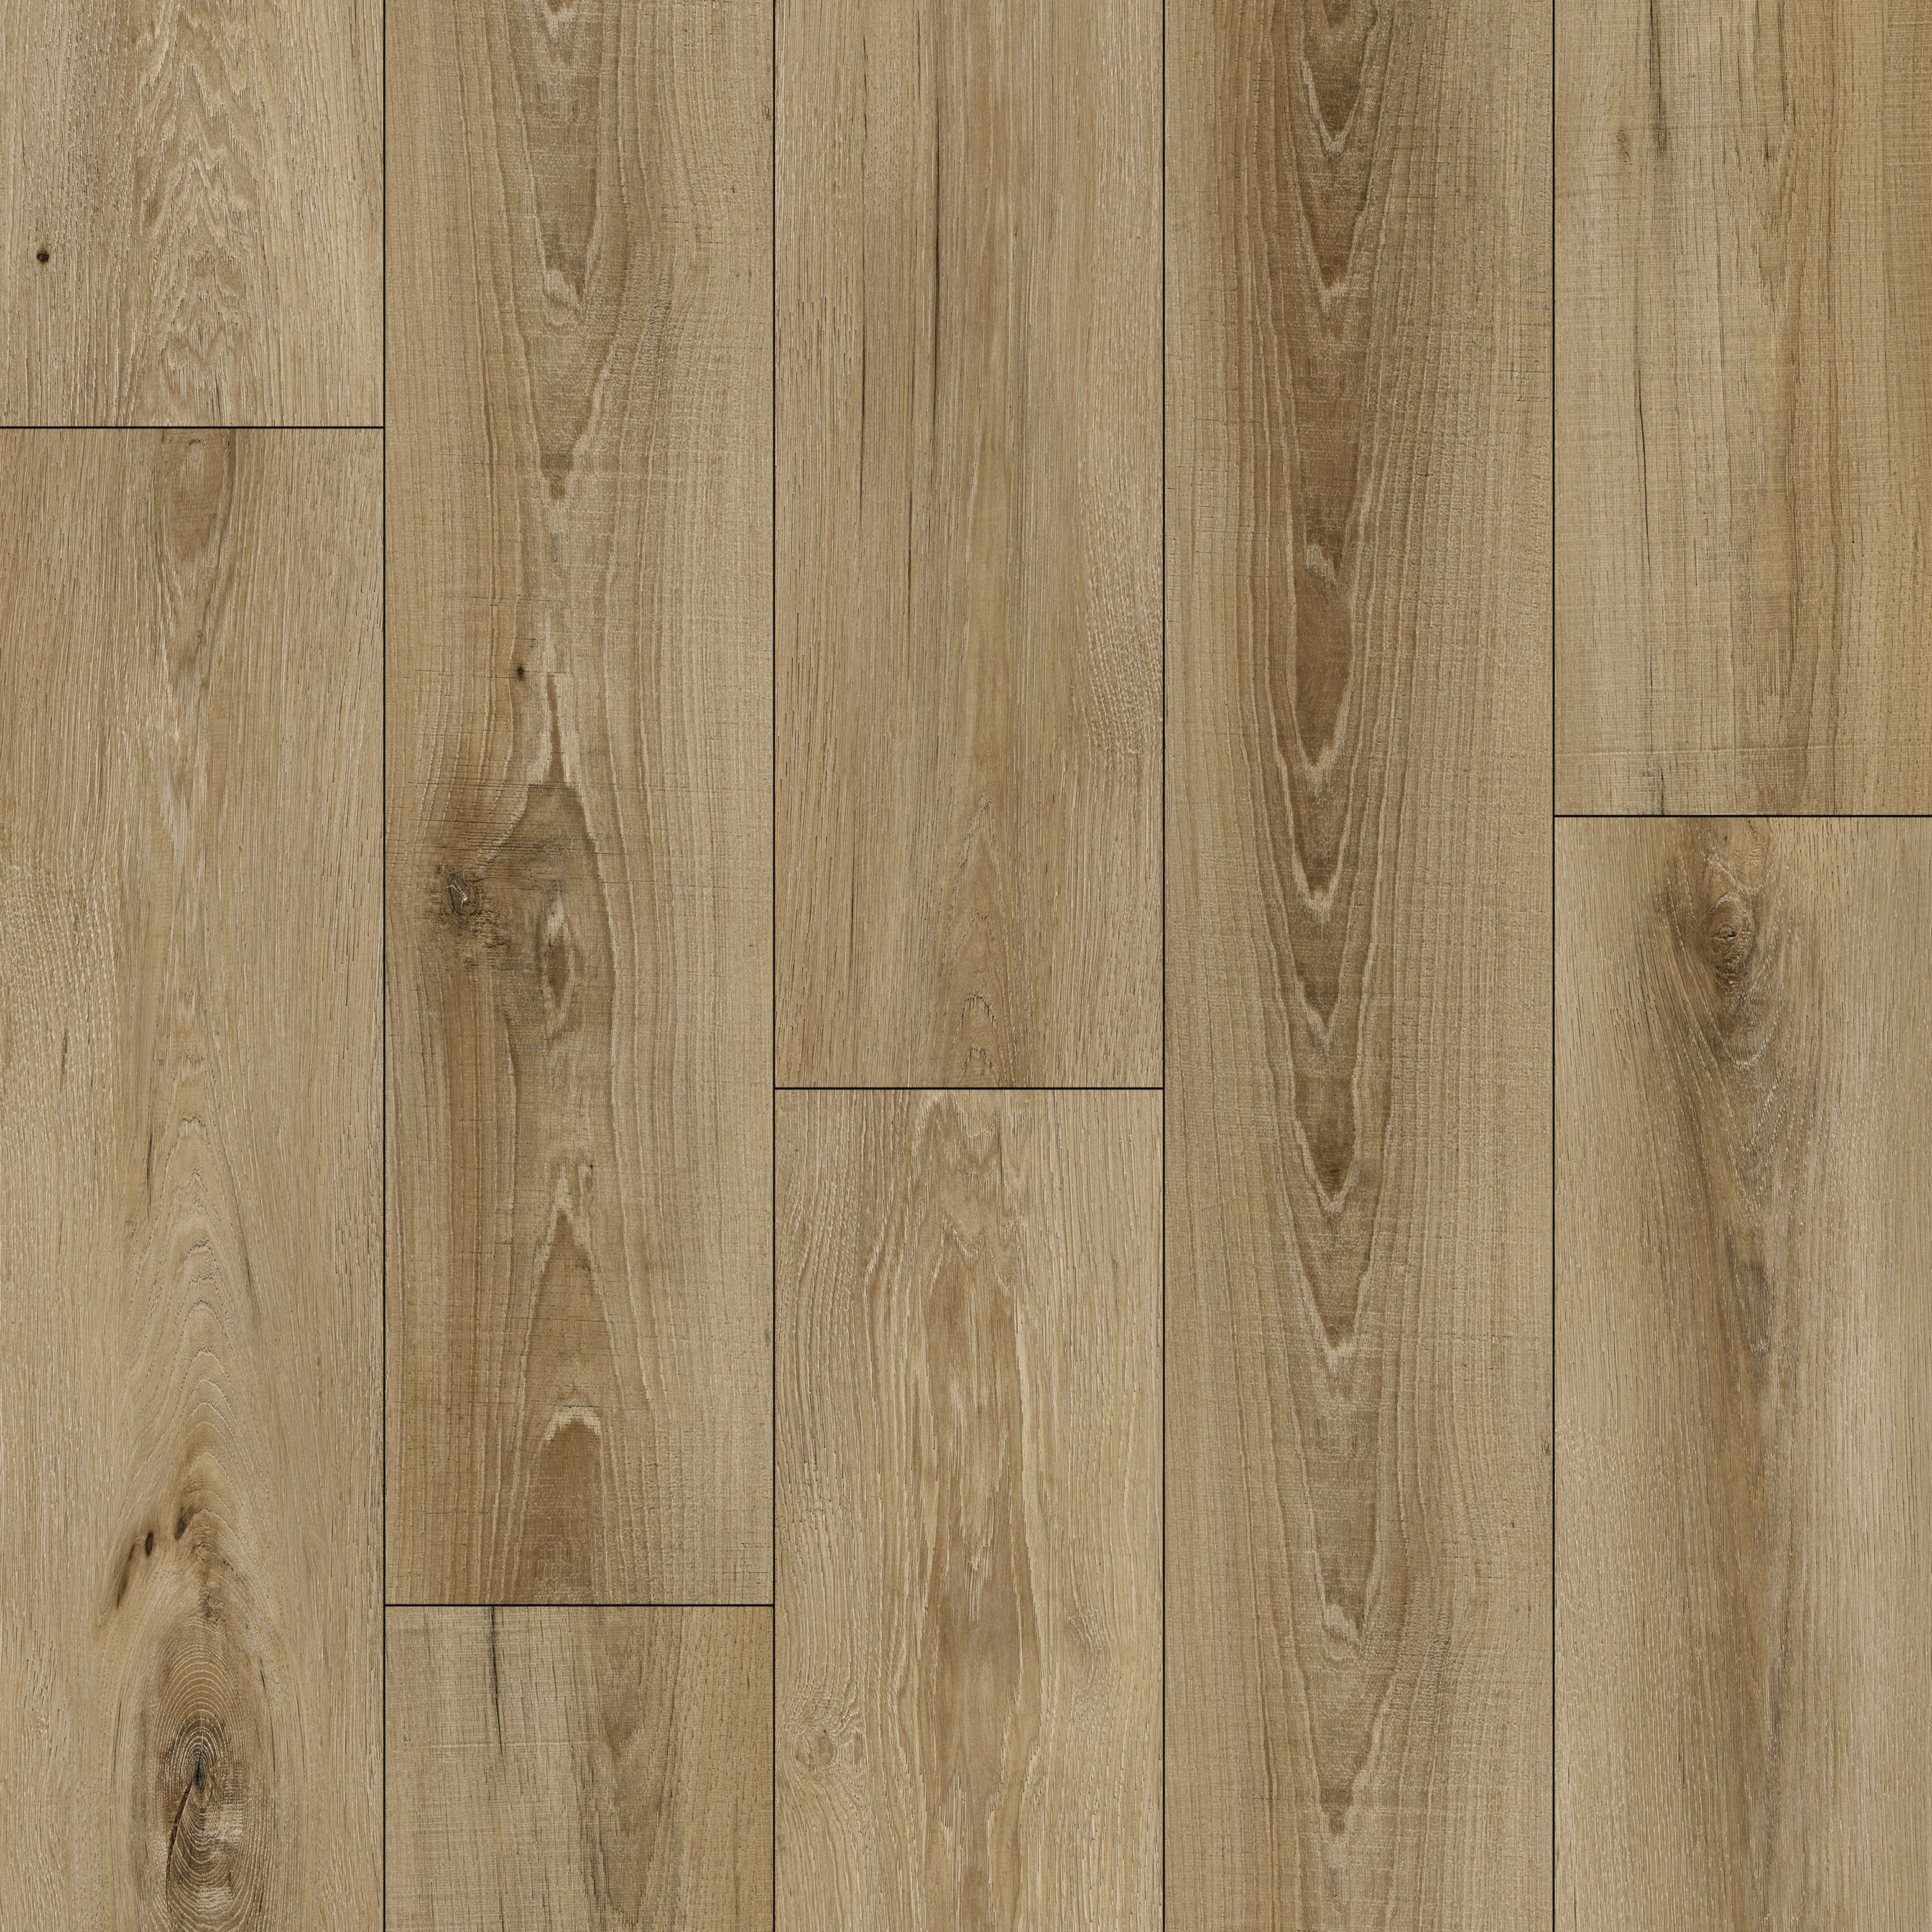 Factory wholesale Weathered Wood Flooring -
 Free Sample SPC Click Floorings Waterproof Thickness PVC Flooring Commercial Wooden PVC Vinyl Flooring – Kangton